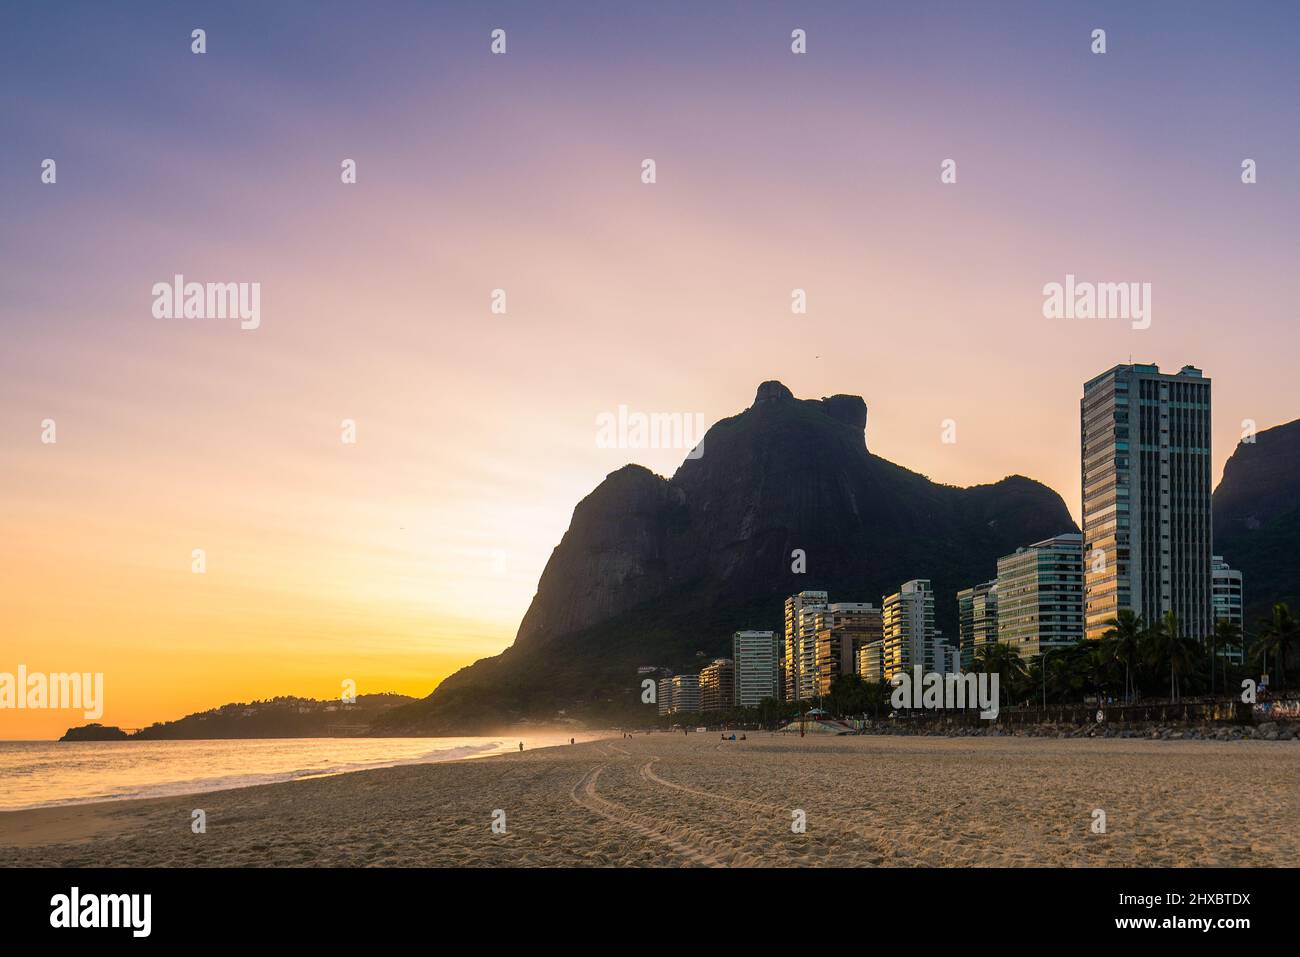 Warm Sunset at Empty Sao Conrado Beach in Rio de Janeiro With Luxury Apartment Buildings and Pedra da Gavea View Stock Photo